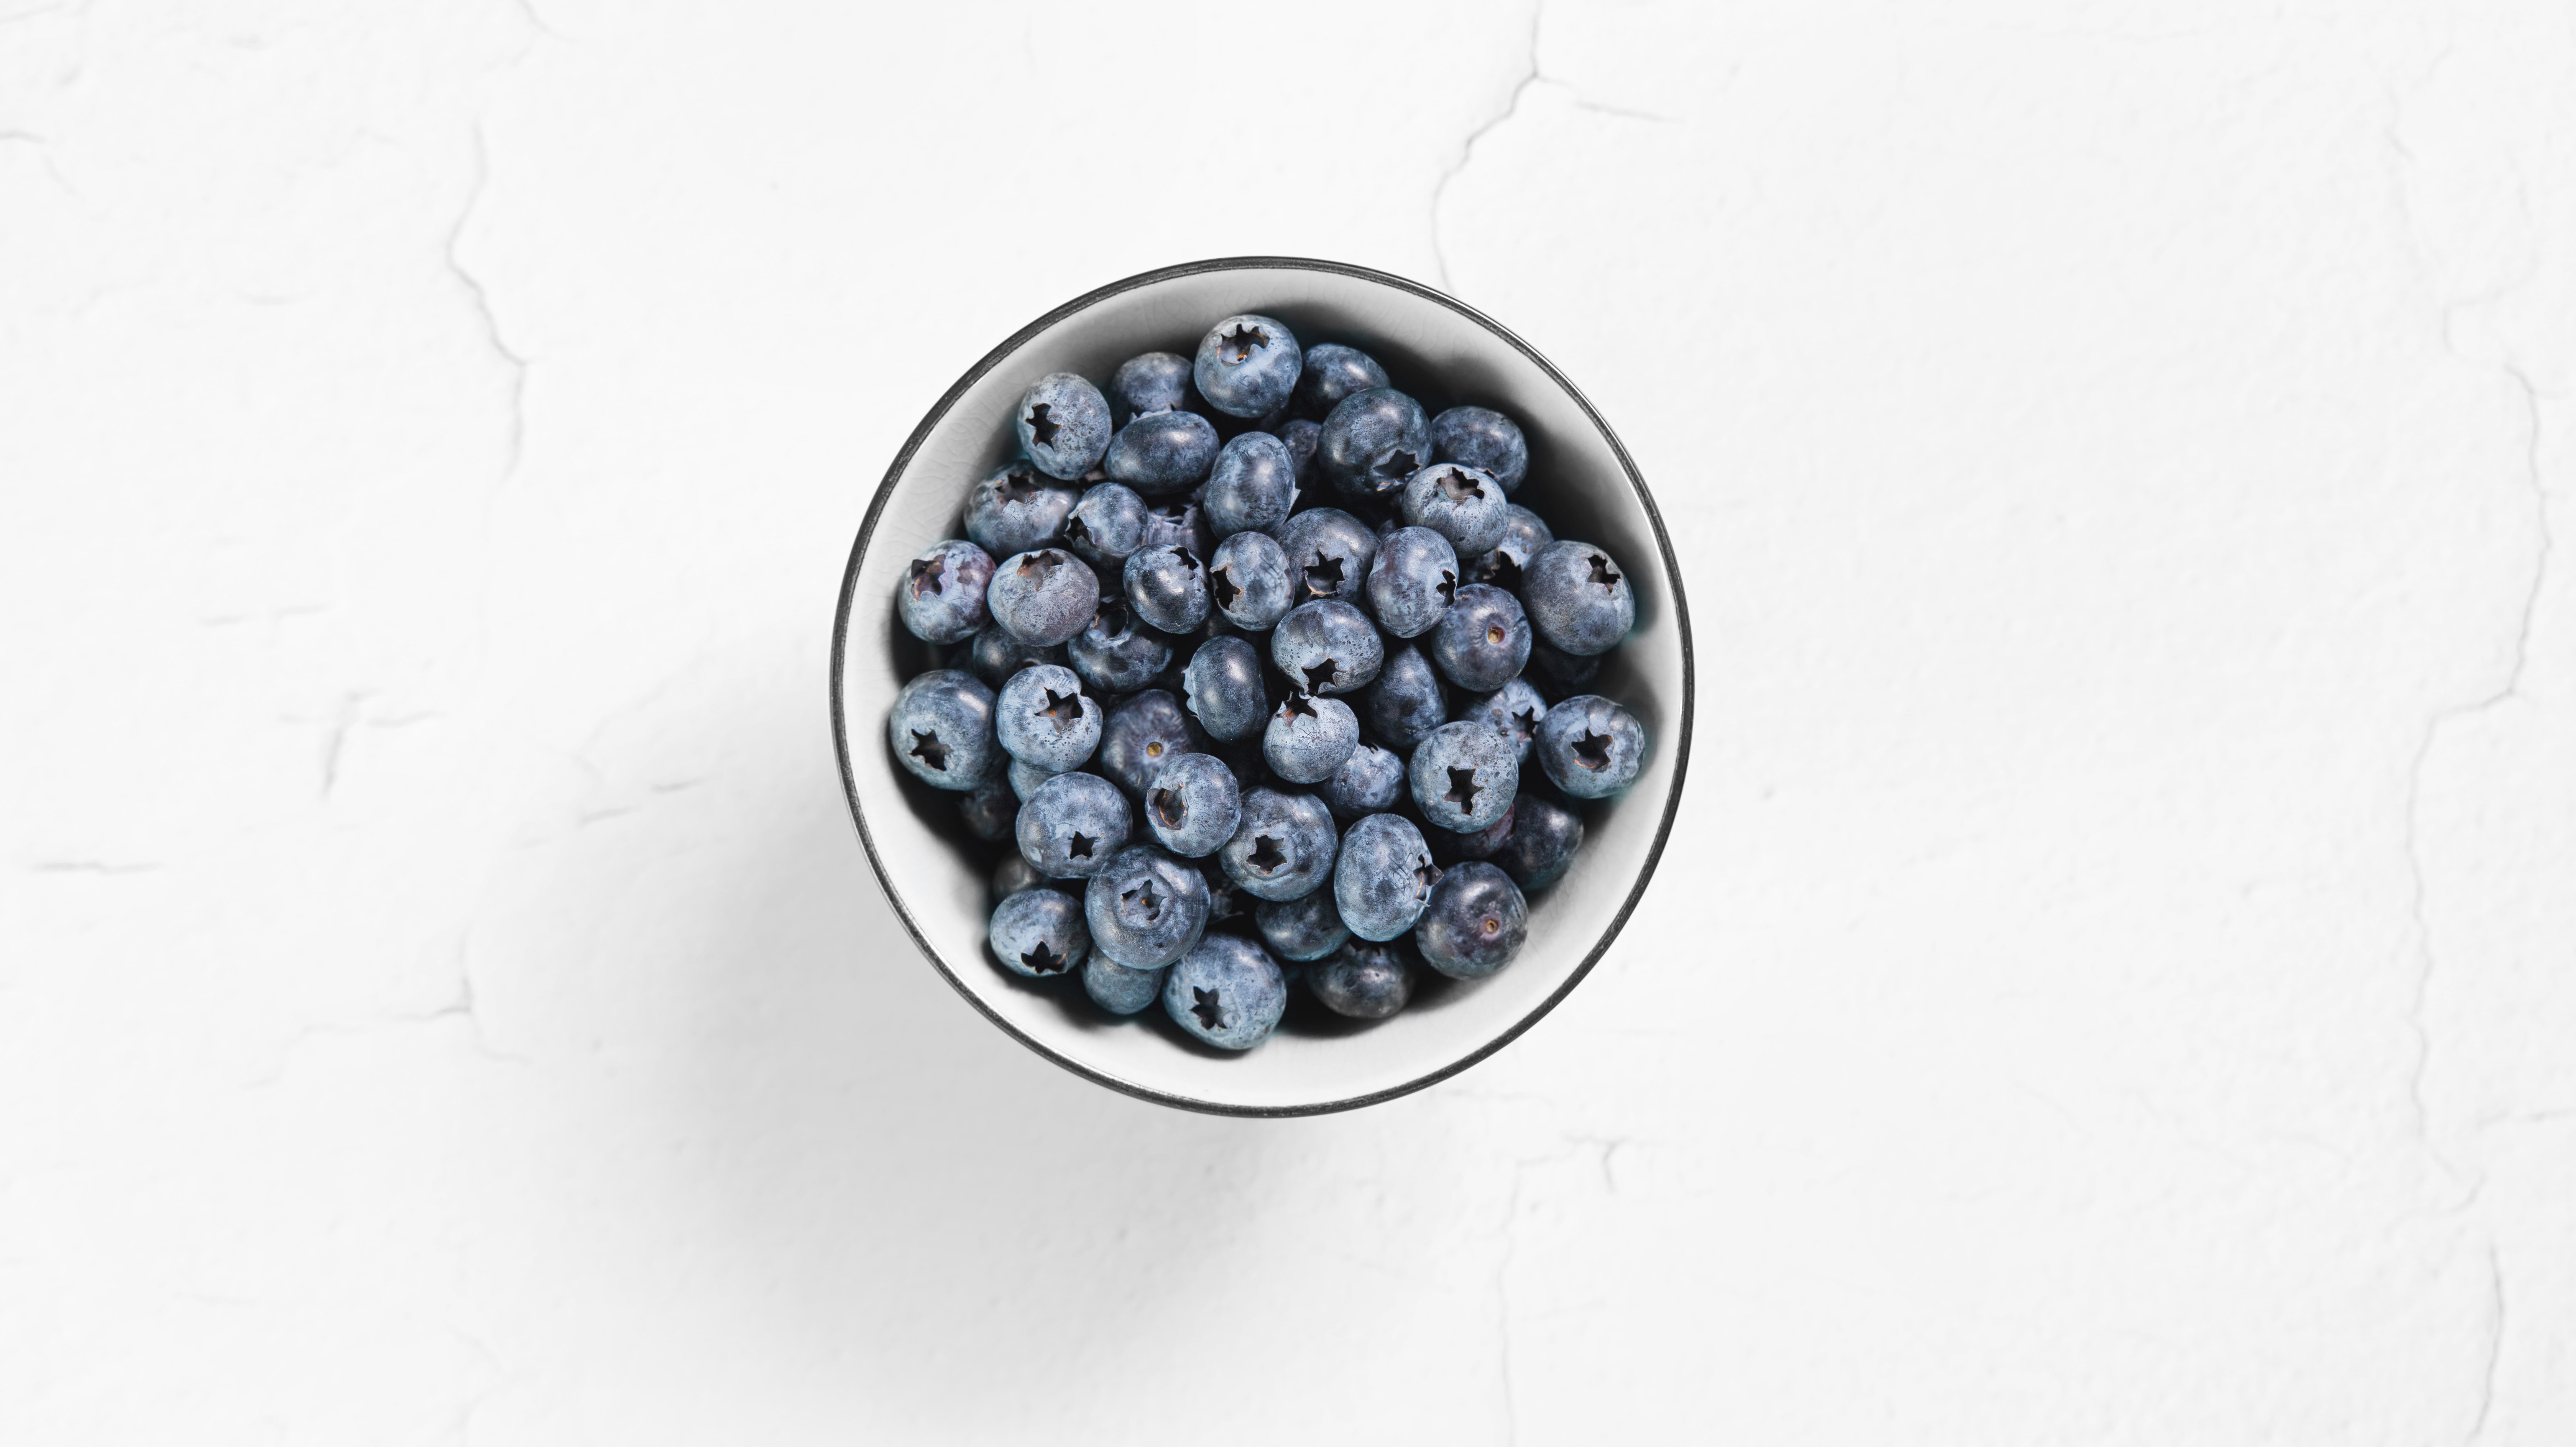 U.S. Highbush Blueberry Growers Association